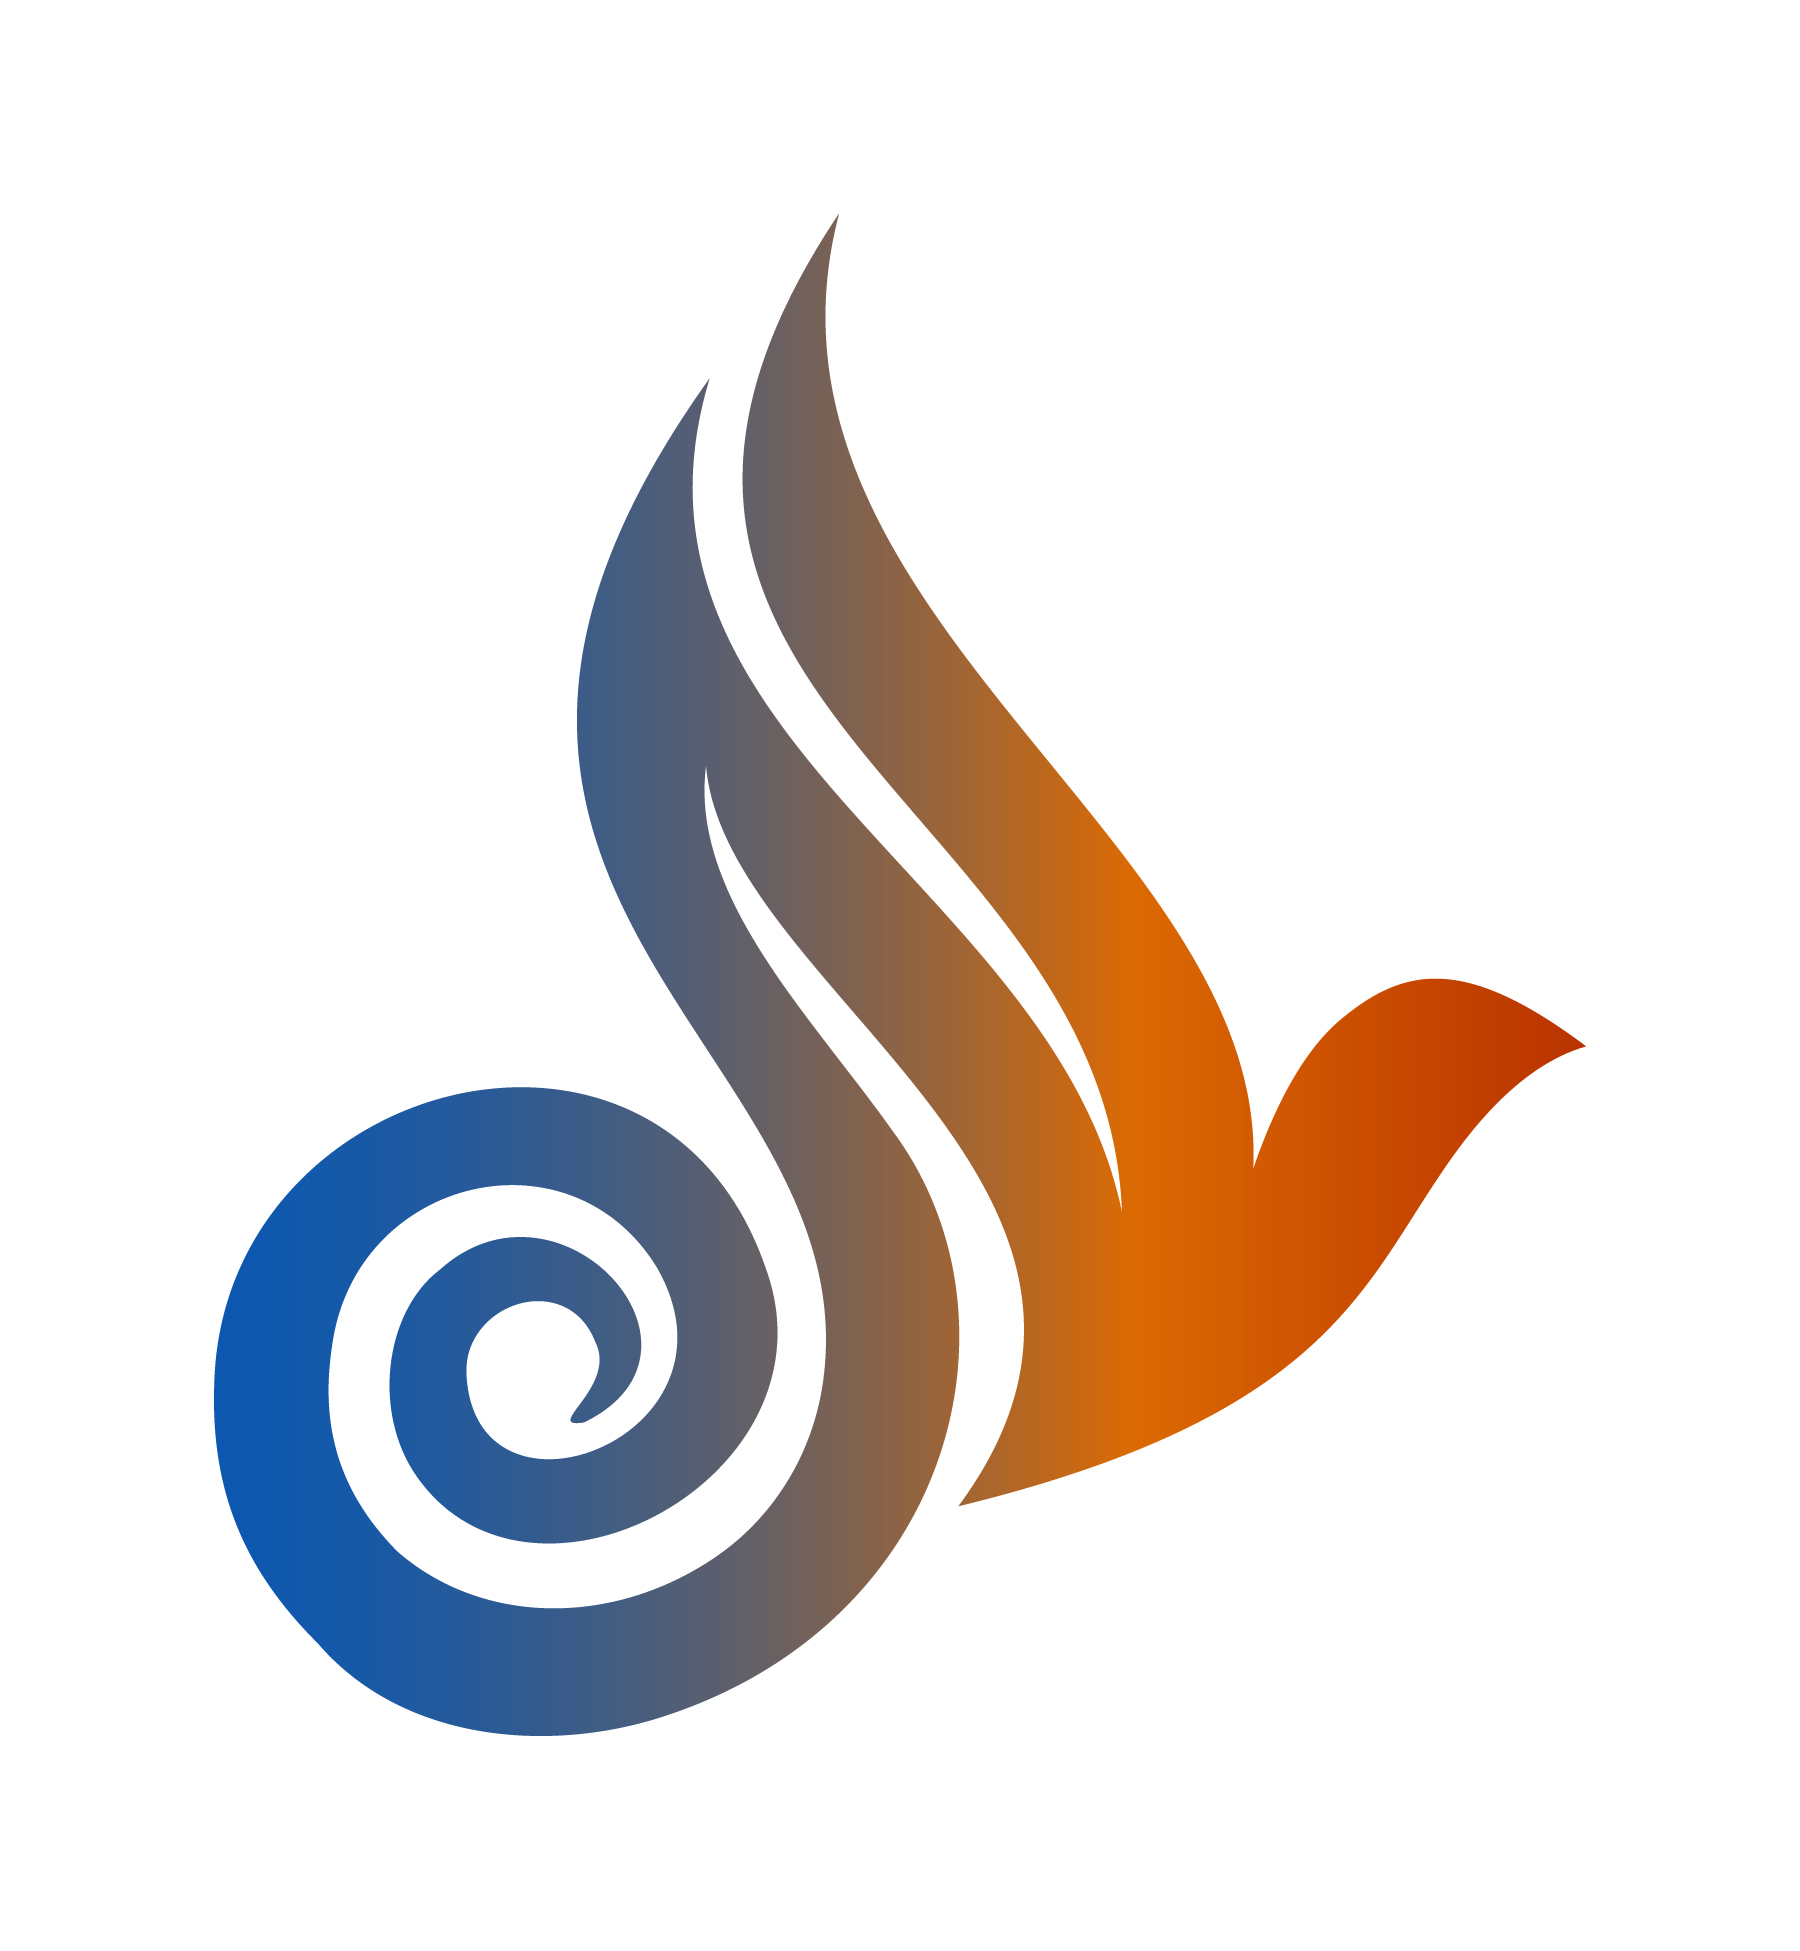 The Resilient Activist's logo: multi-colored snailbird